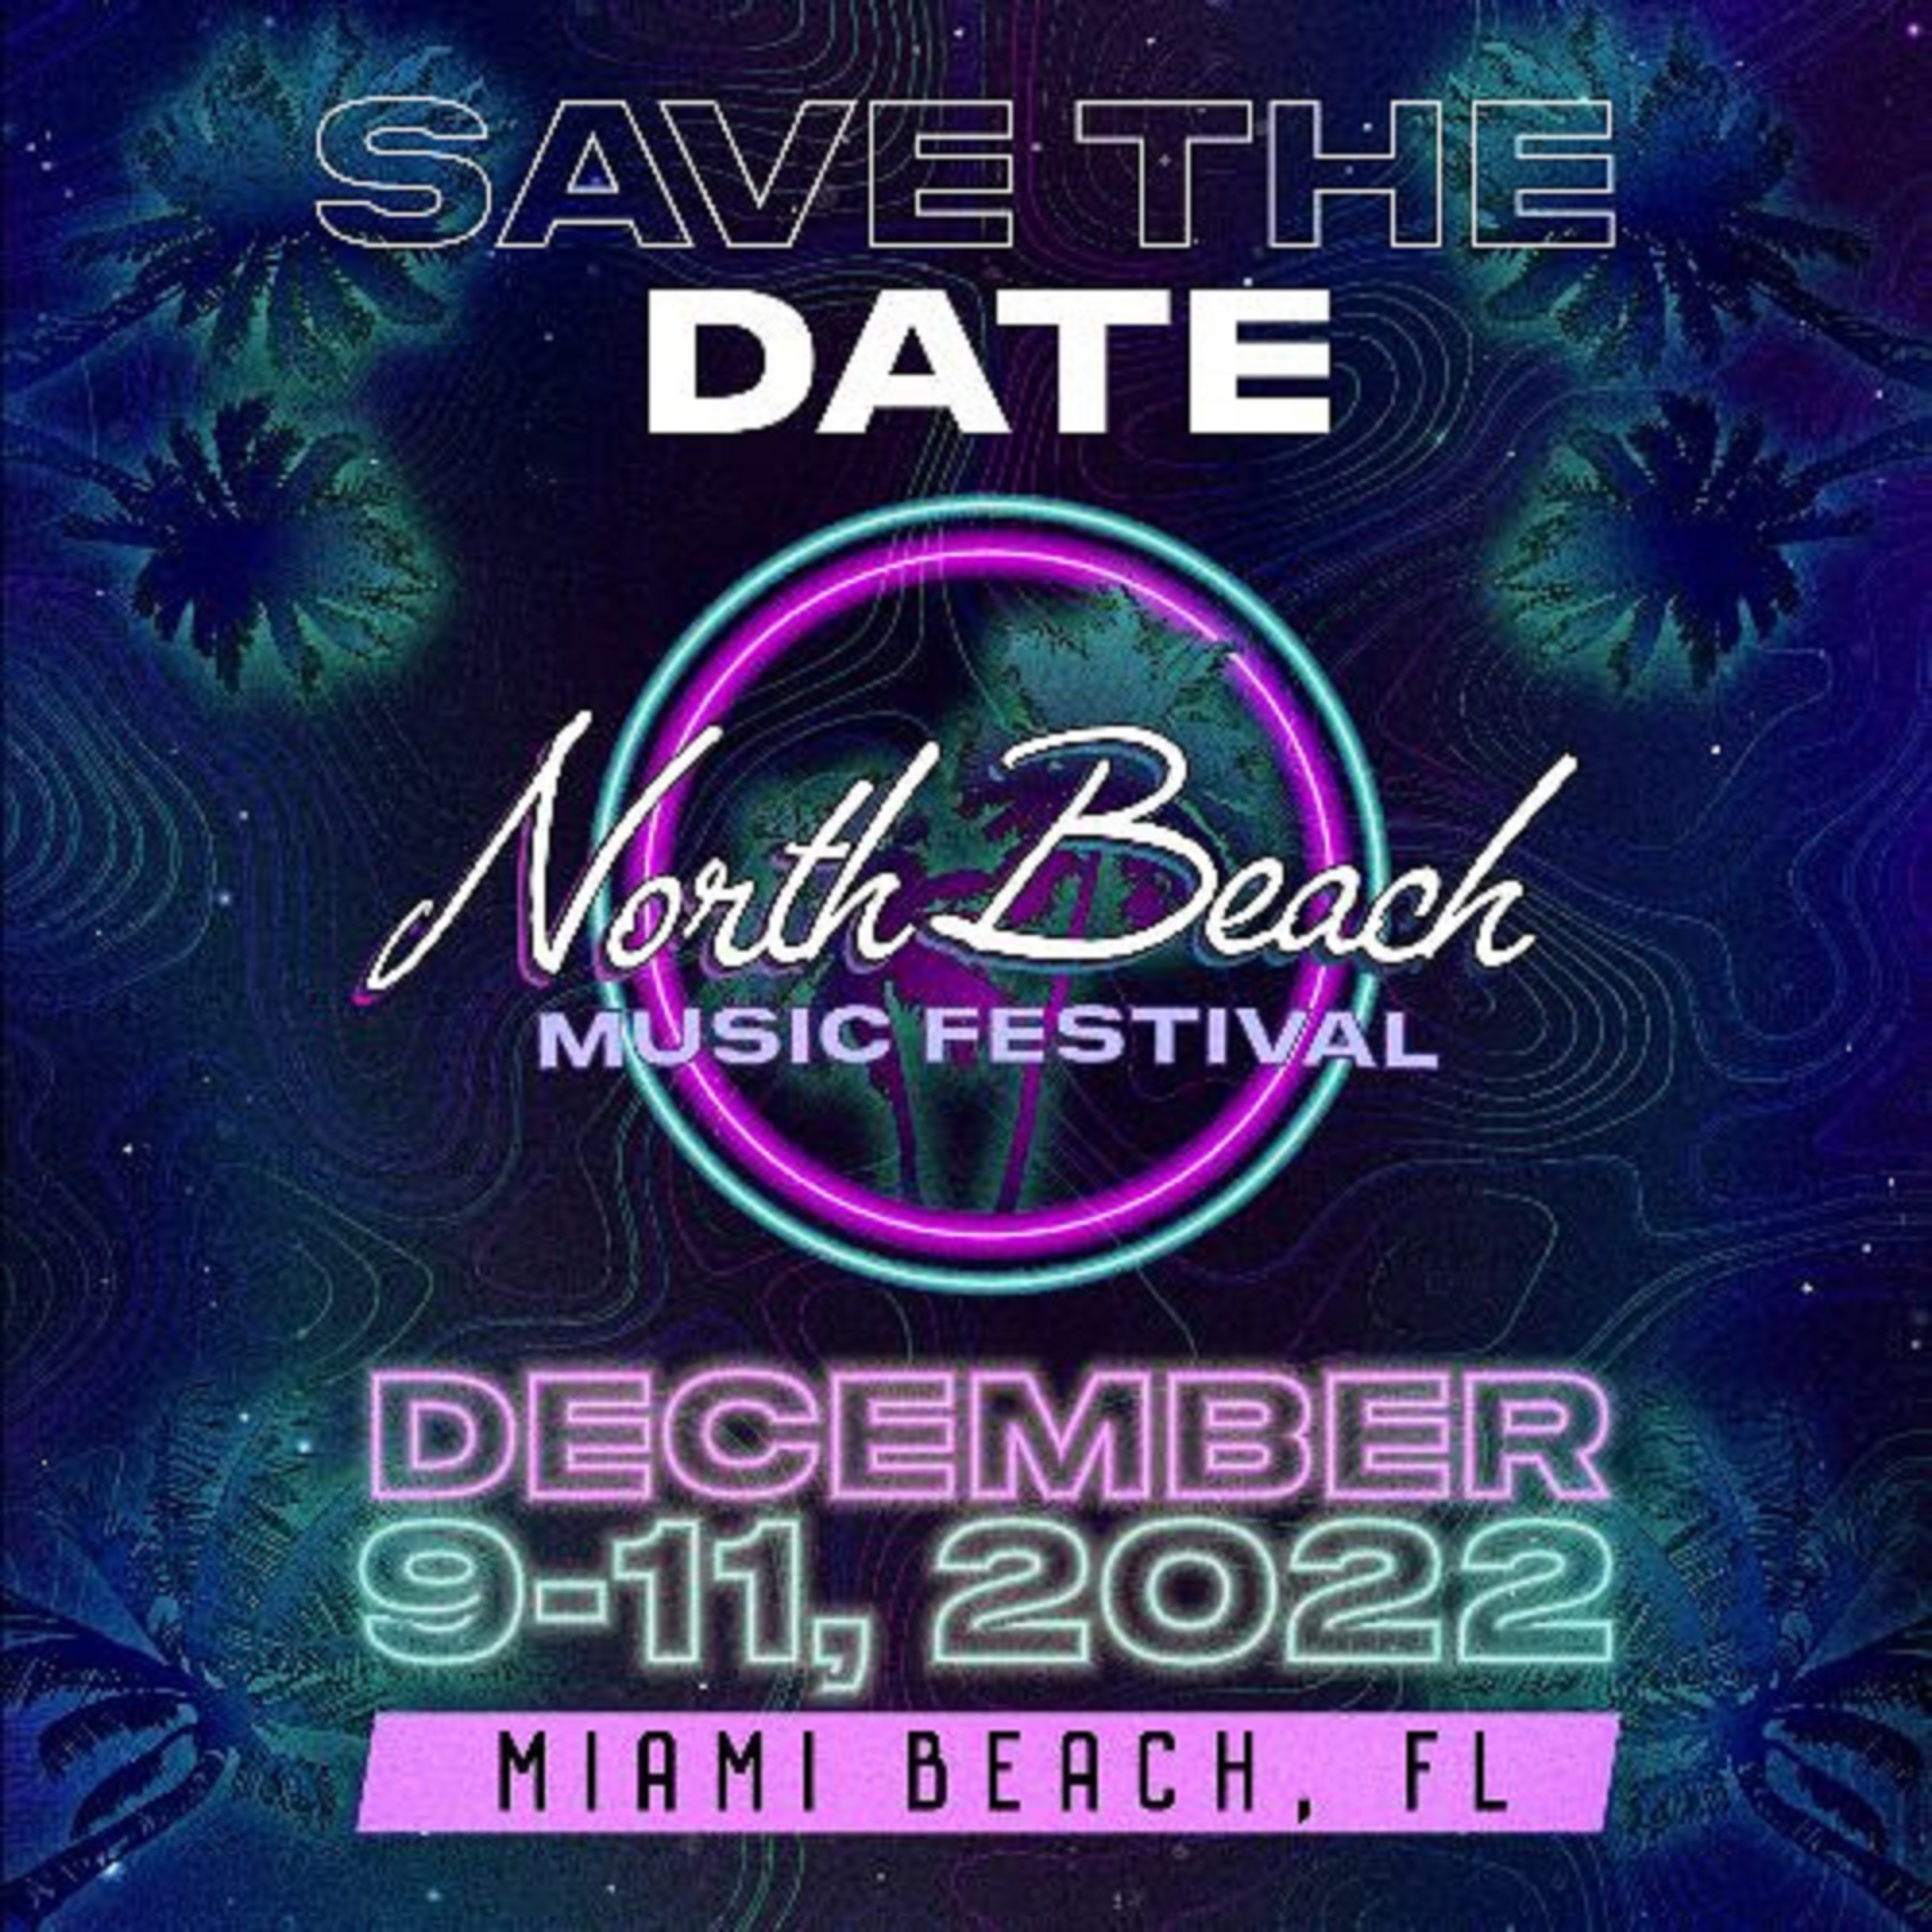 North Beach Music Festival Returns This December